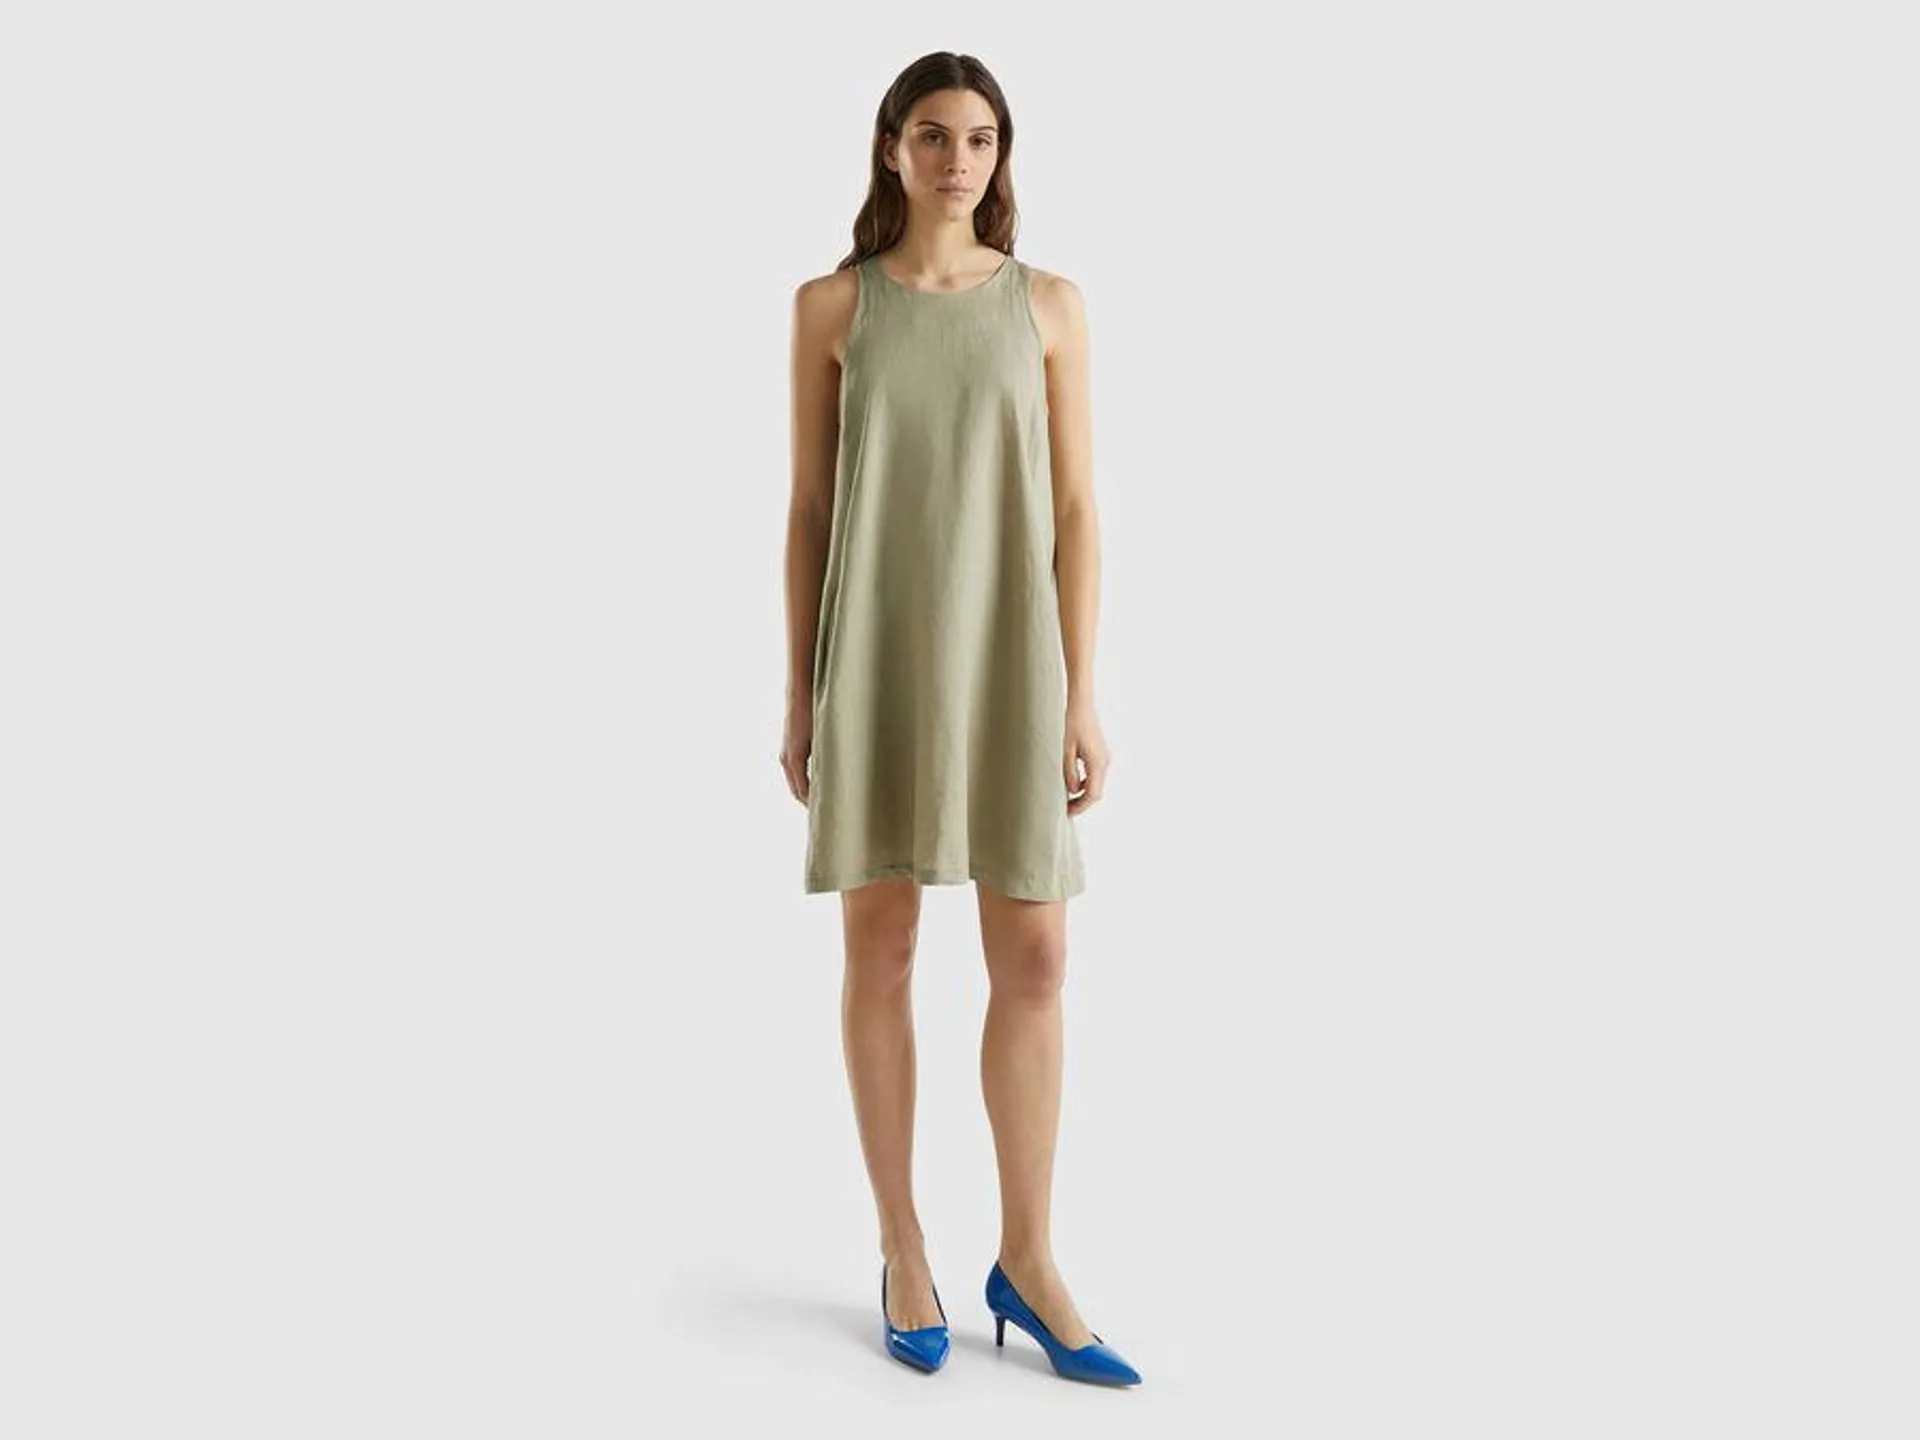 Sleeveless dress in pure linen